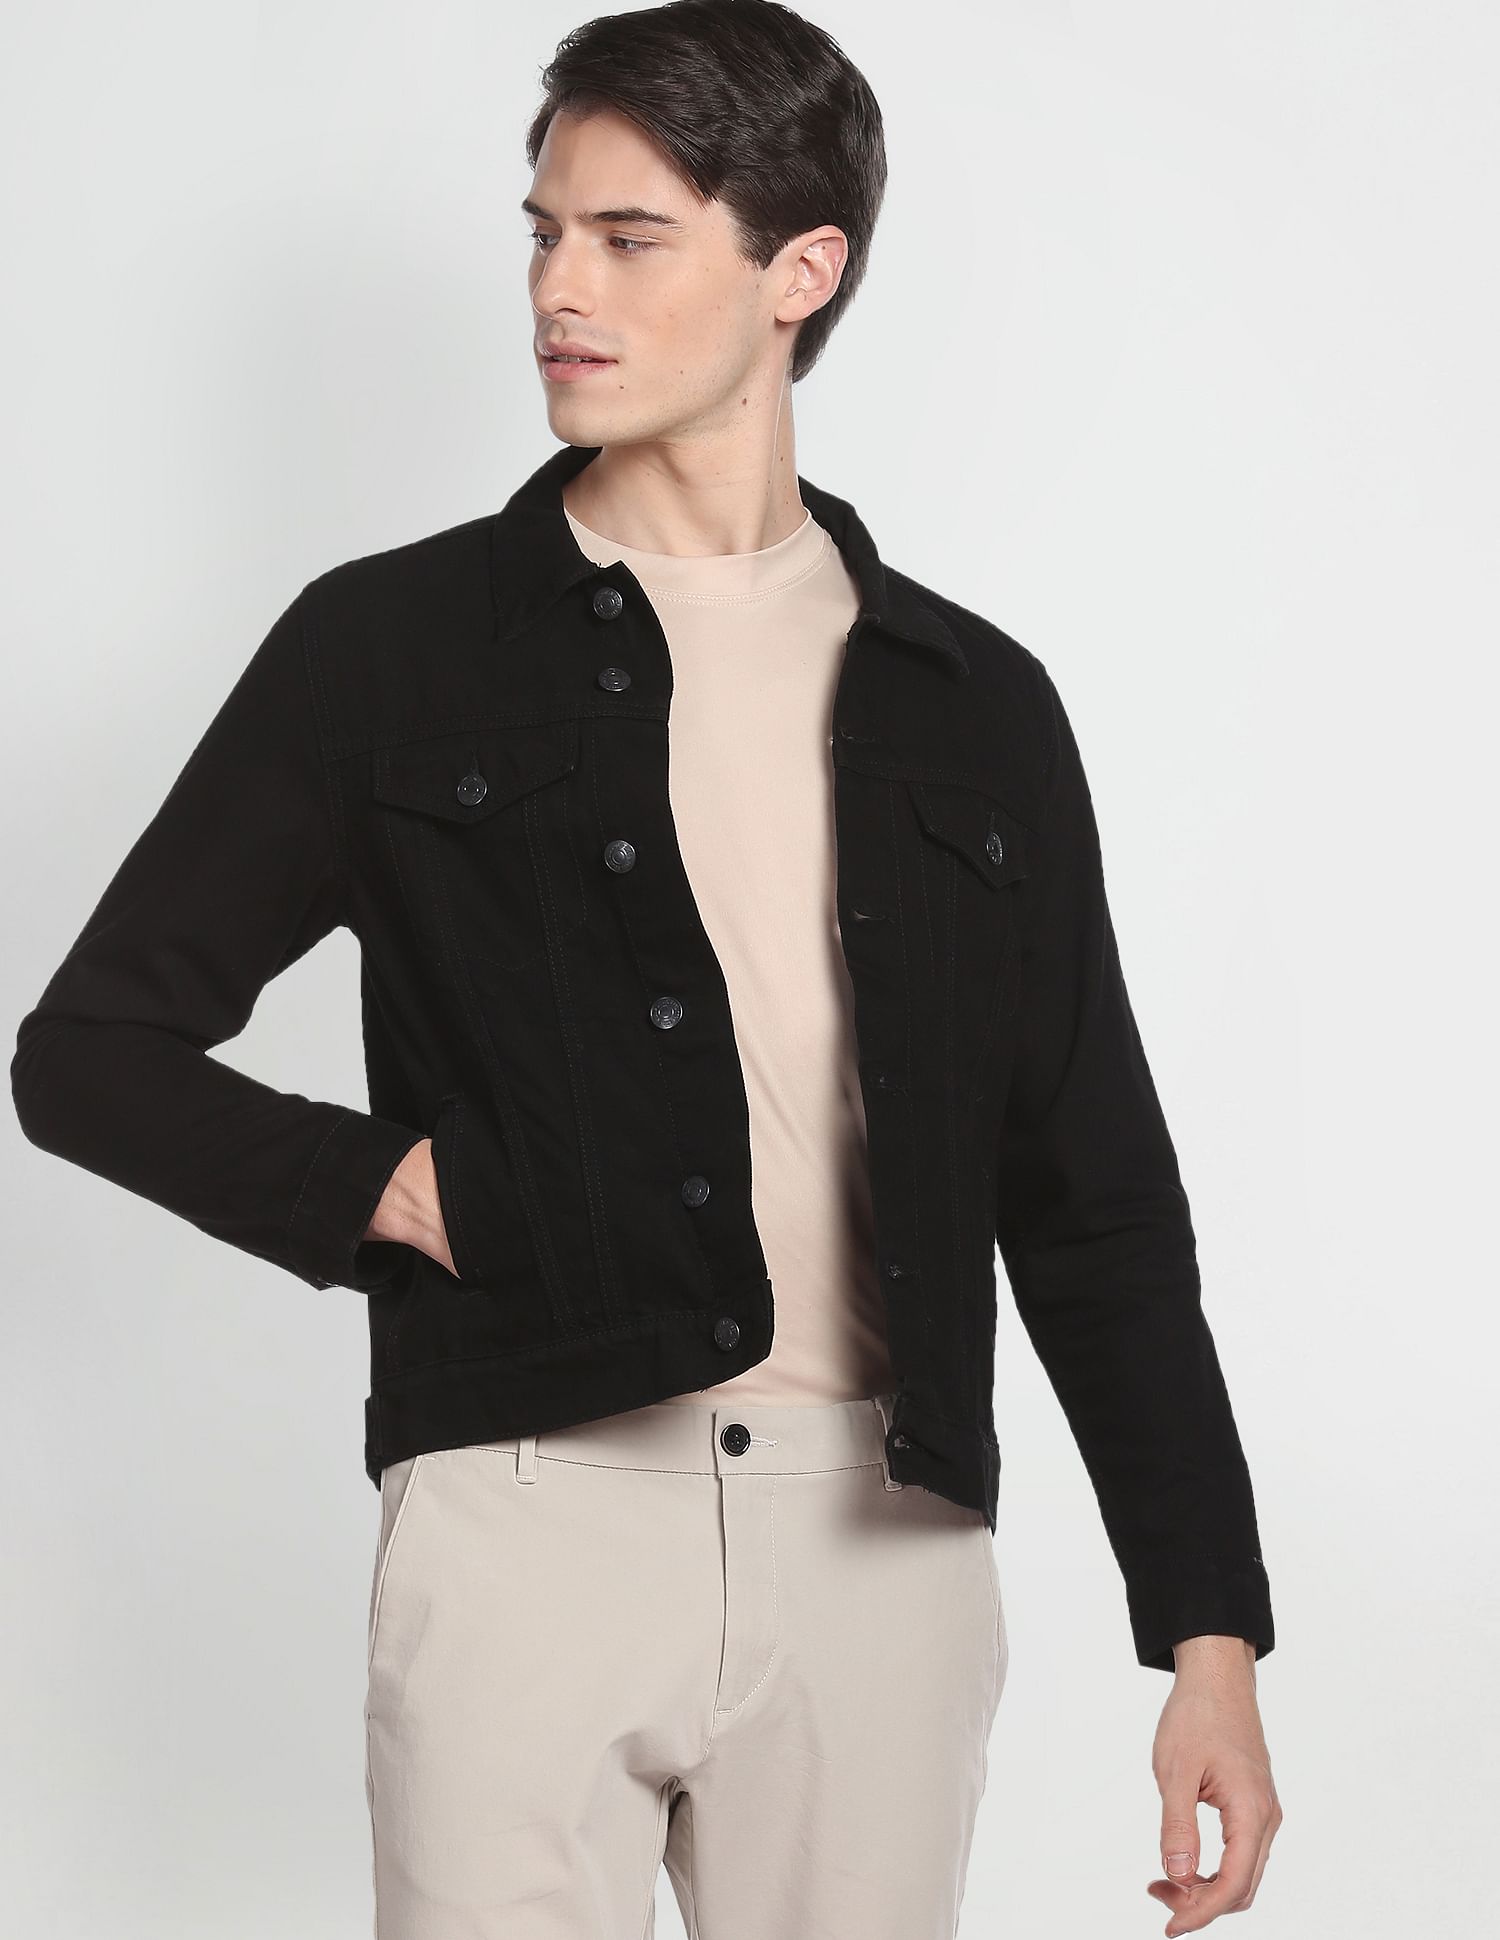 QIMYUM Jean Jacket For Men, Distressed Slim Denim Jacket (Small, Black) at  Amazon Men's Clothing store